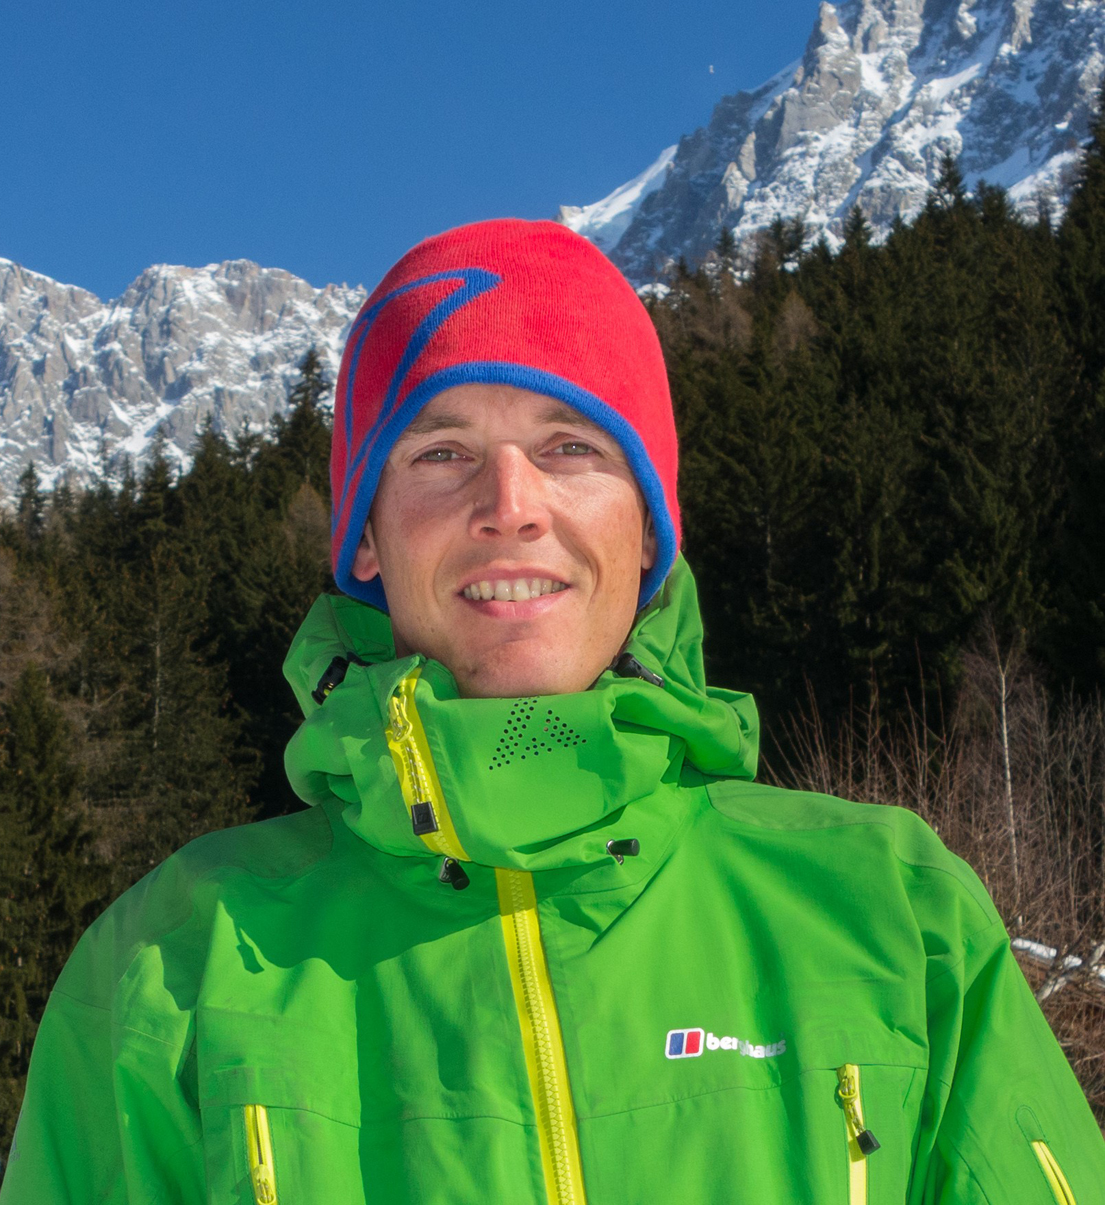 Berghaus adds ski alpinist Ross Hewitt to team of athletes | WebWire